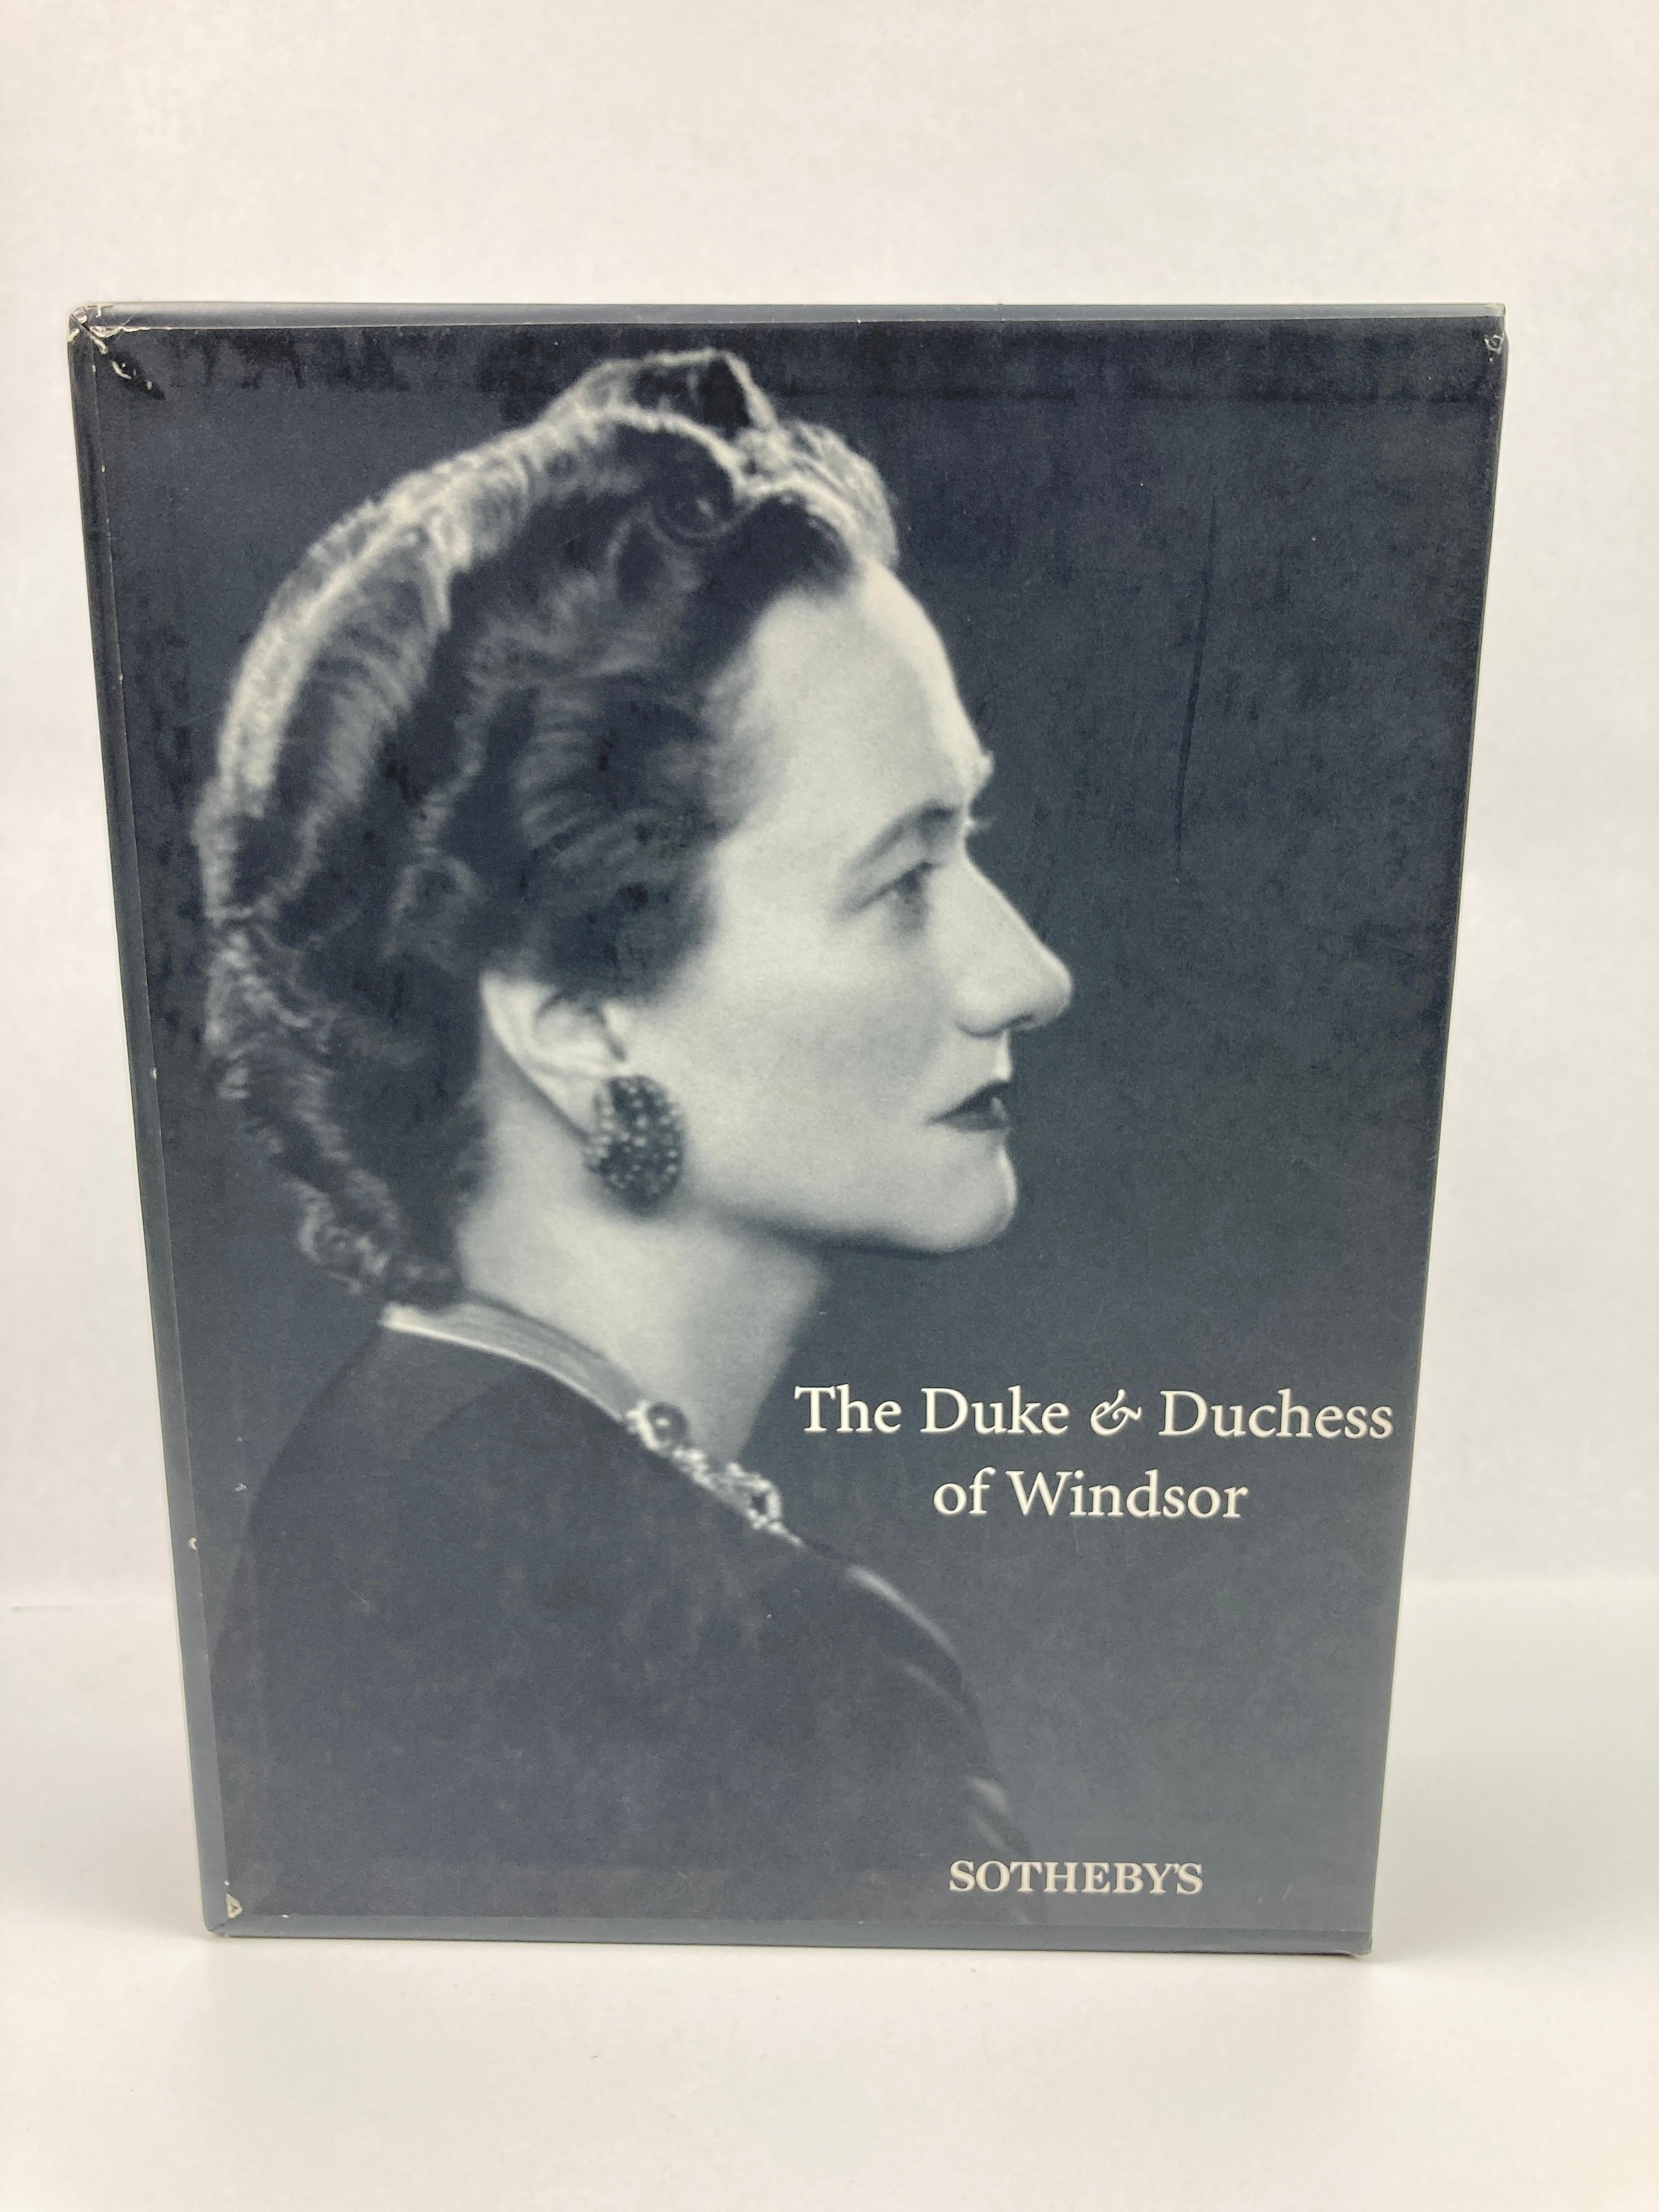 The Duke and Duchess of Windsor Auction Sothebys Books Catalogs in Slipcase Box For Sale 3